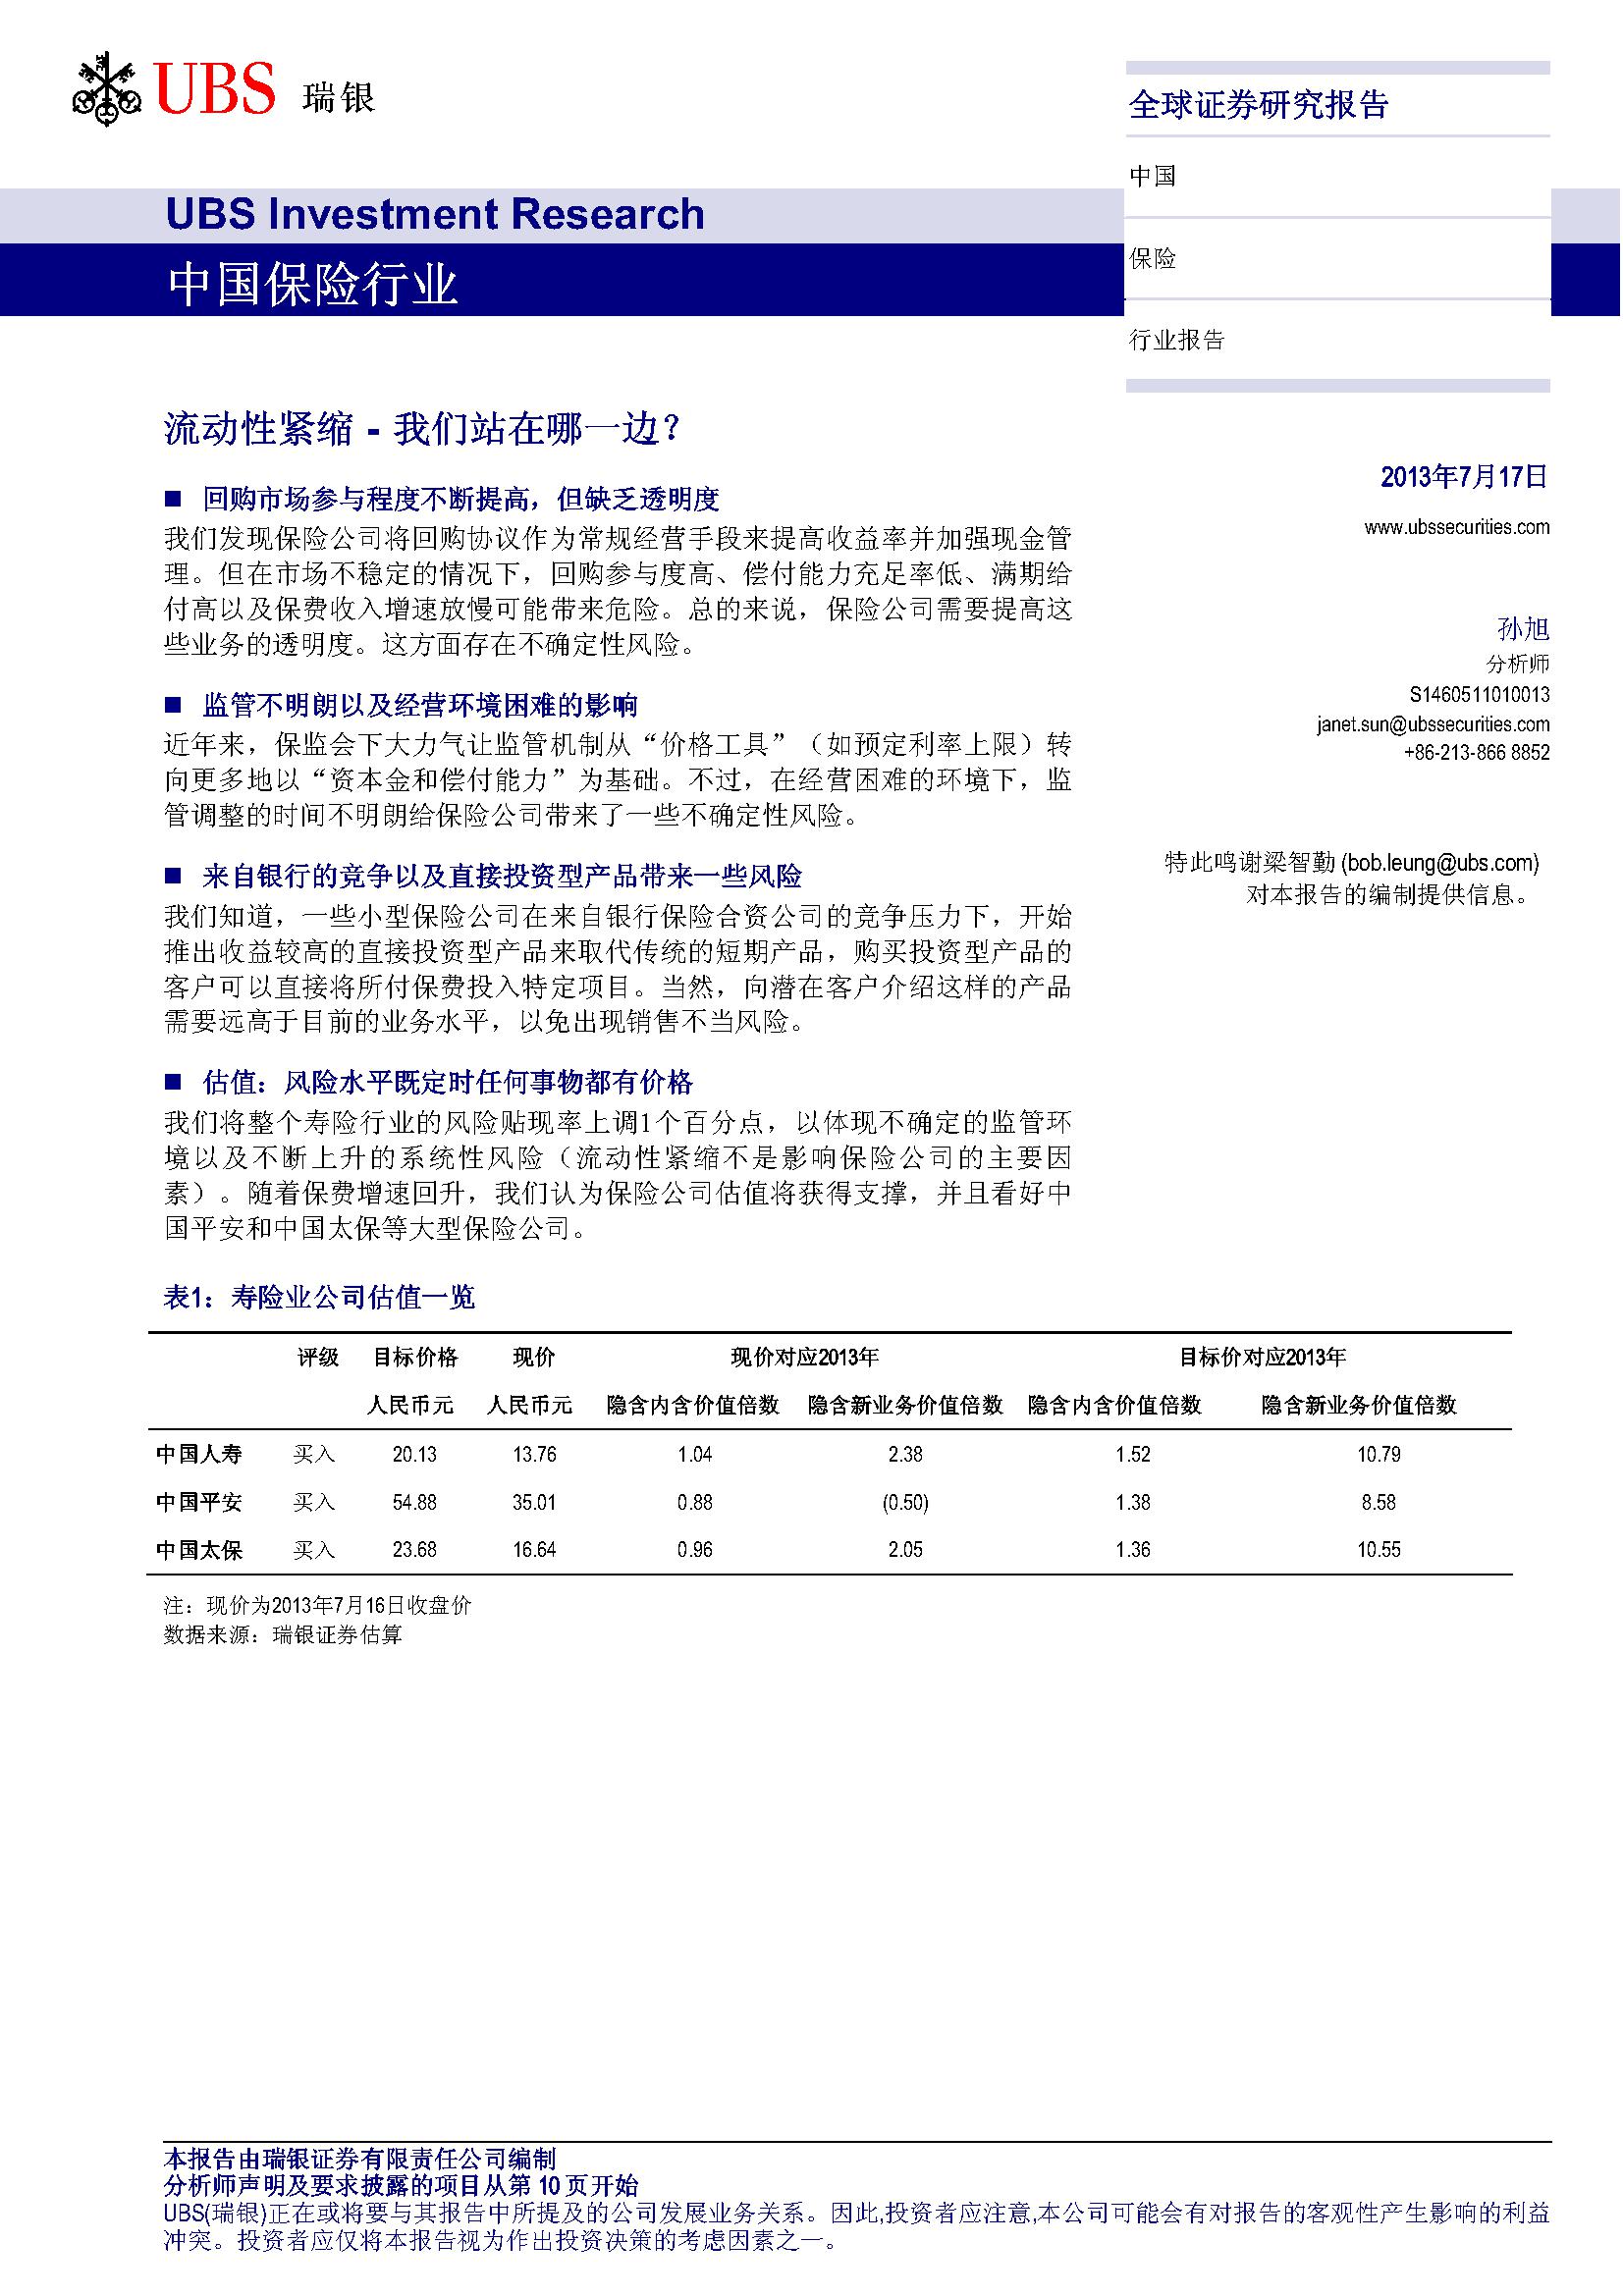 UBS-China Insurance-20130717.jpg